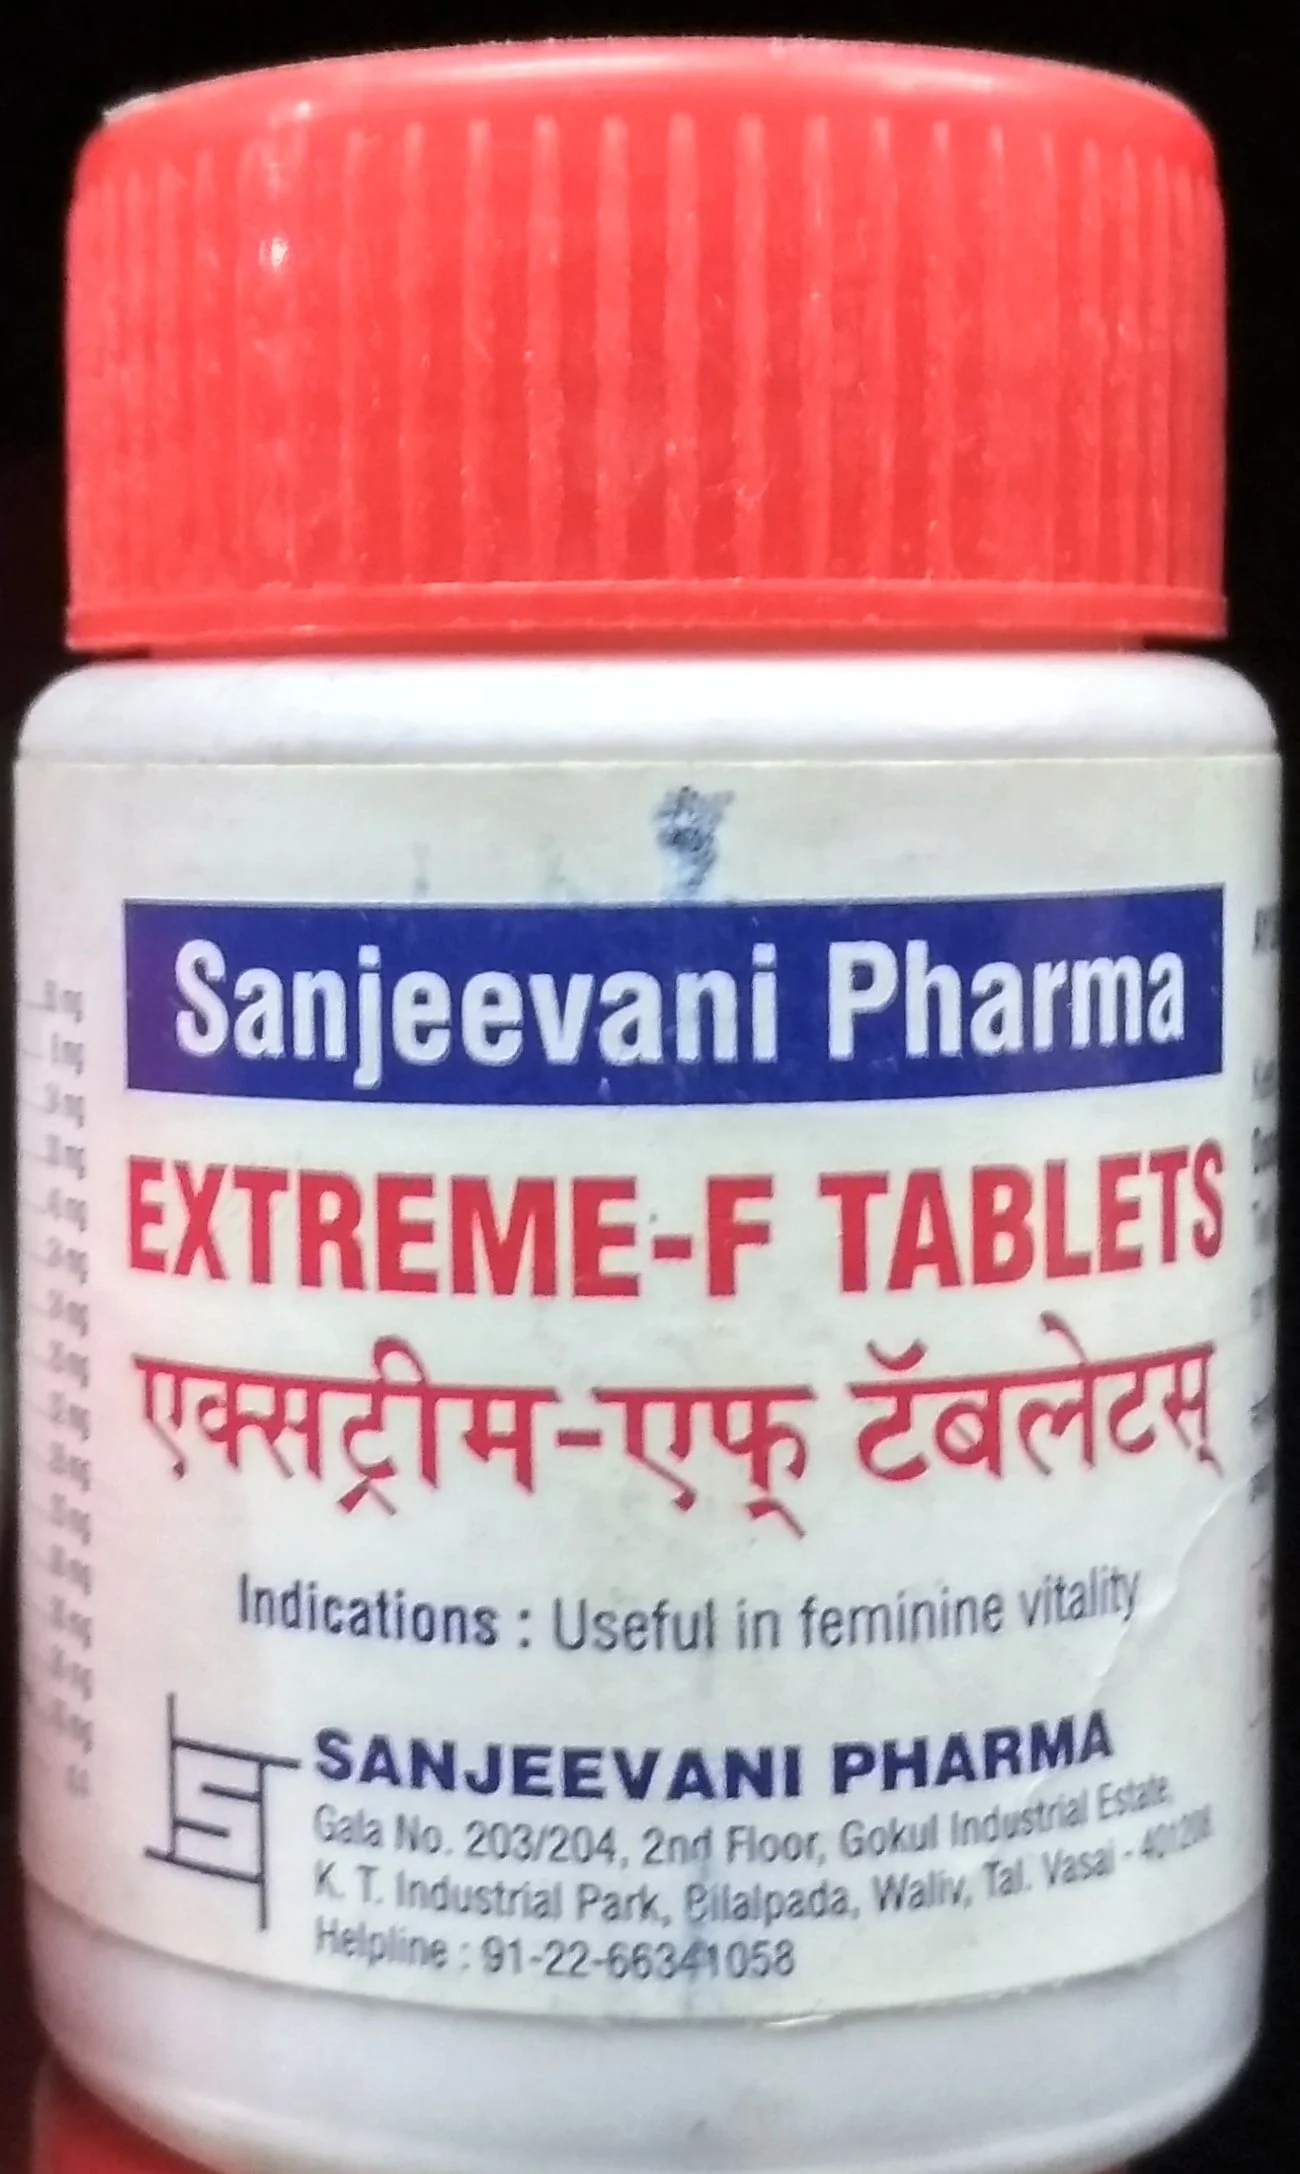 Extreme-F 500tab upto 20% off sanjeevani pharma mumbai